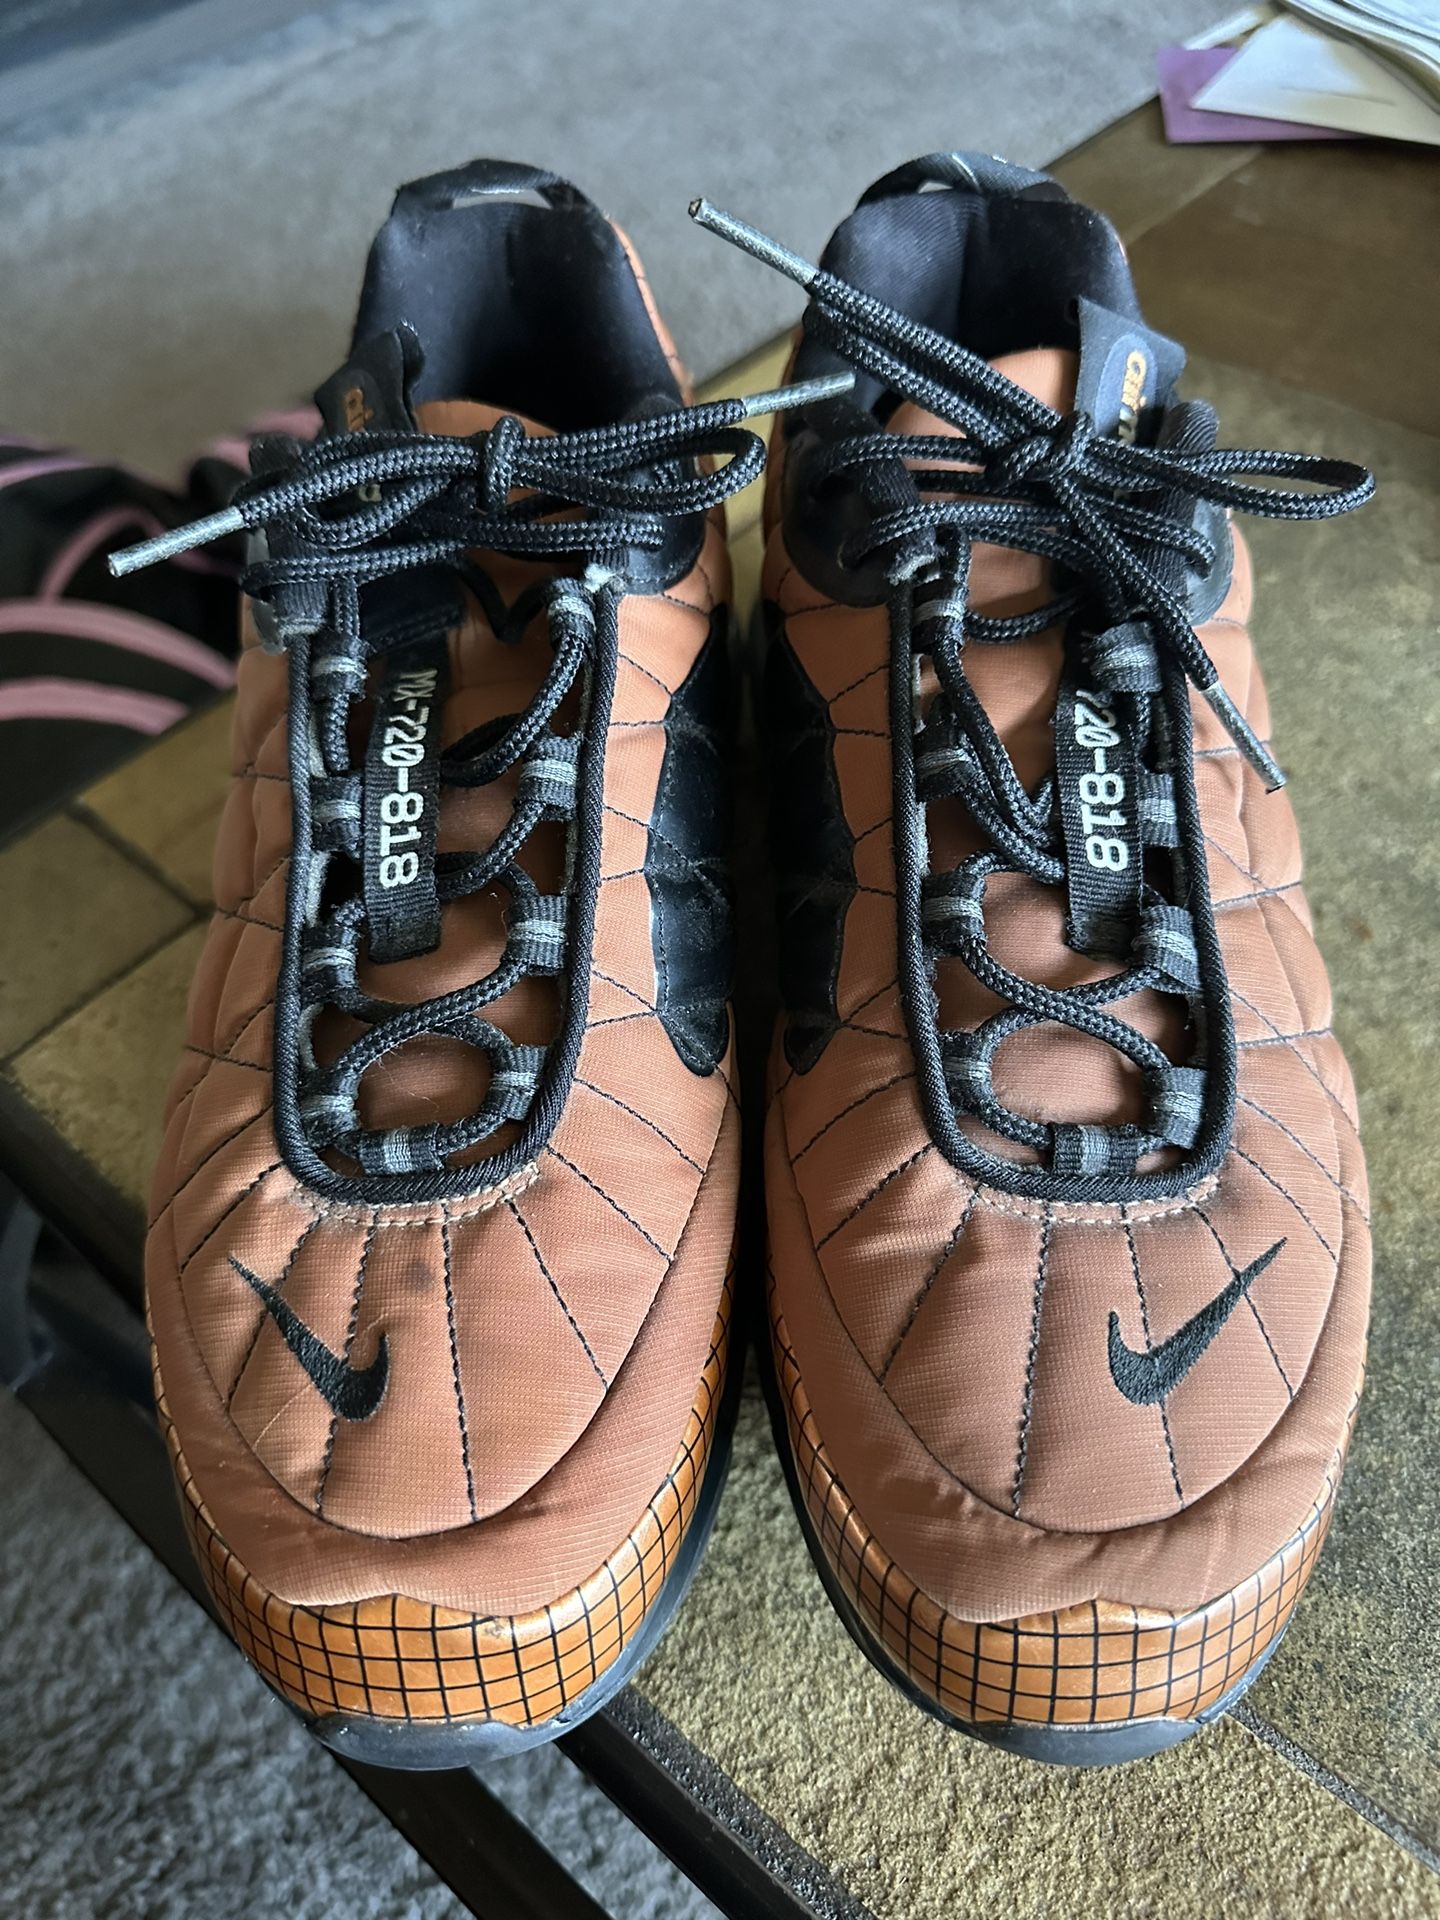 Nike Air Max Shoes. 720-818 Black Metallic Copper Size 10